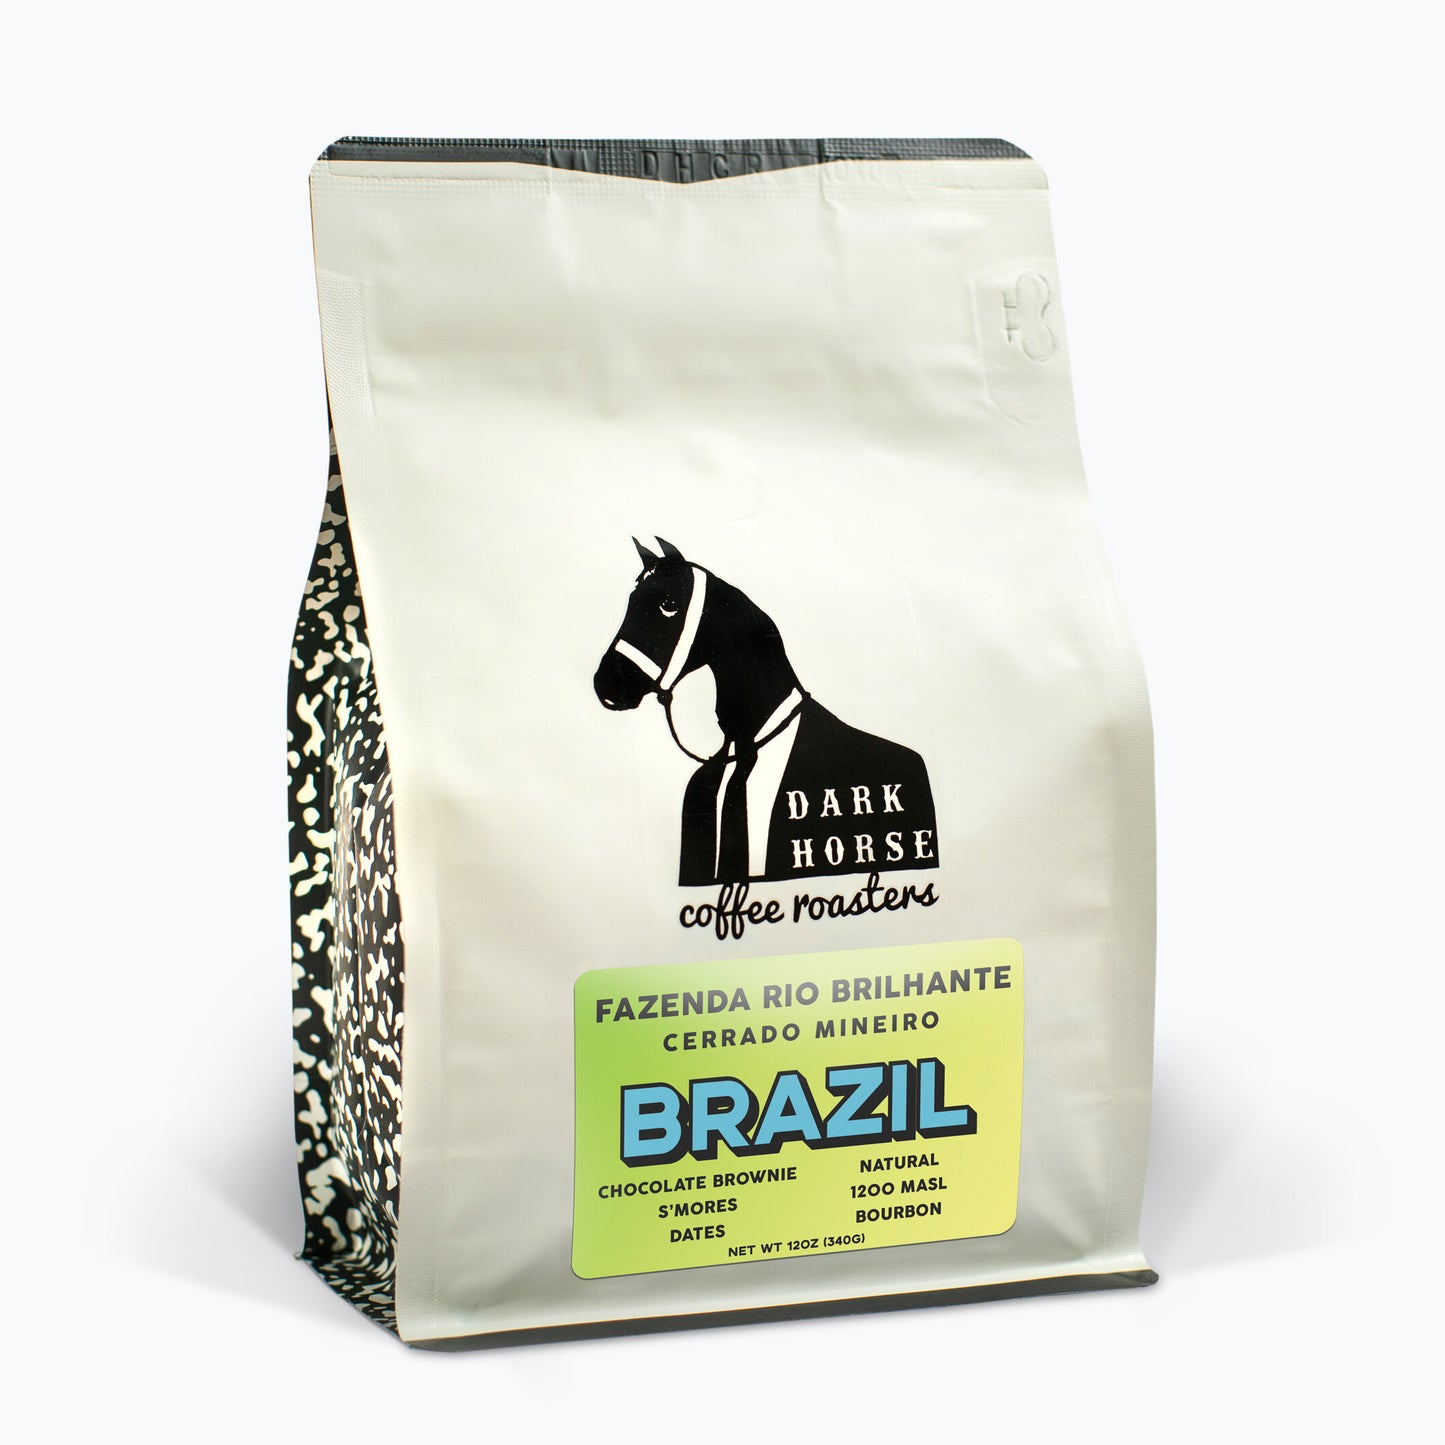 Brazilian coffee beans from Dark Horse Coffee Roasters